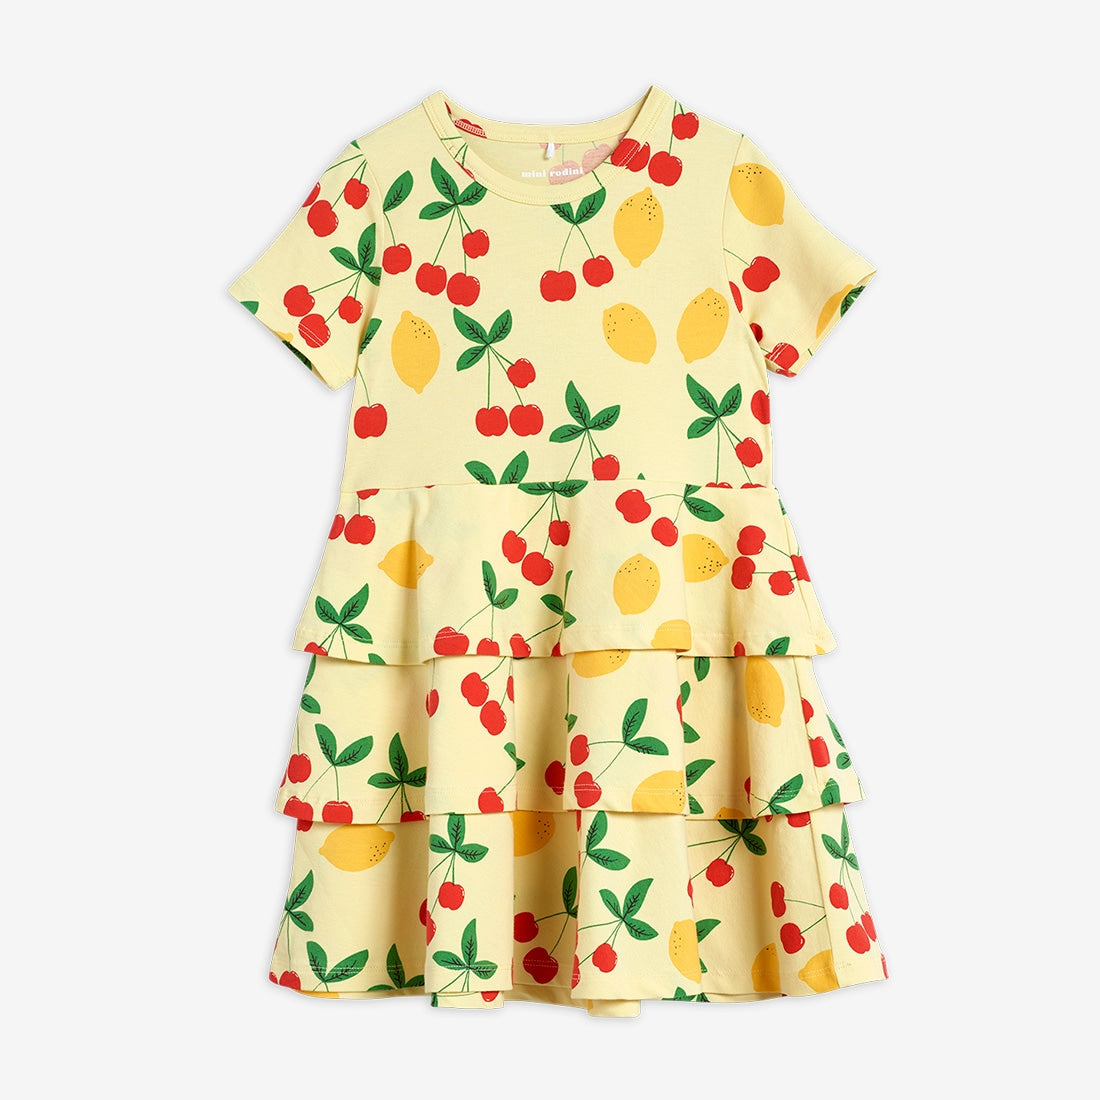 MinI Rodini cherry lemonade dress